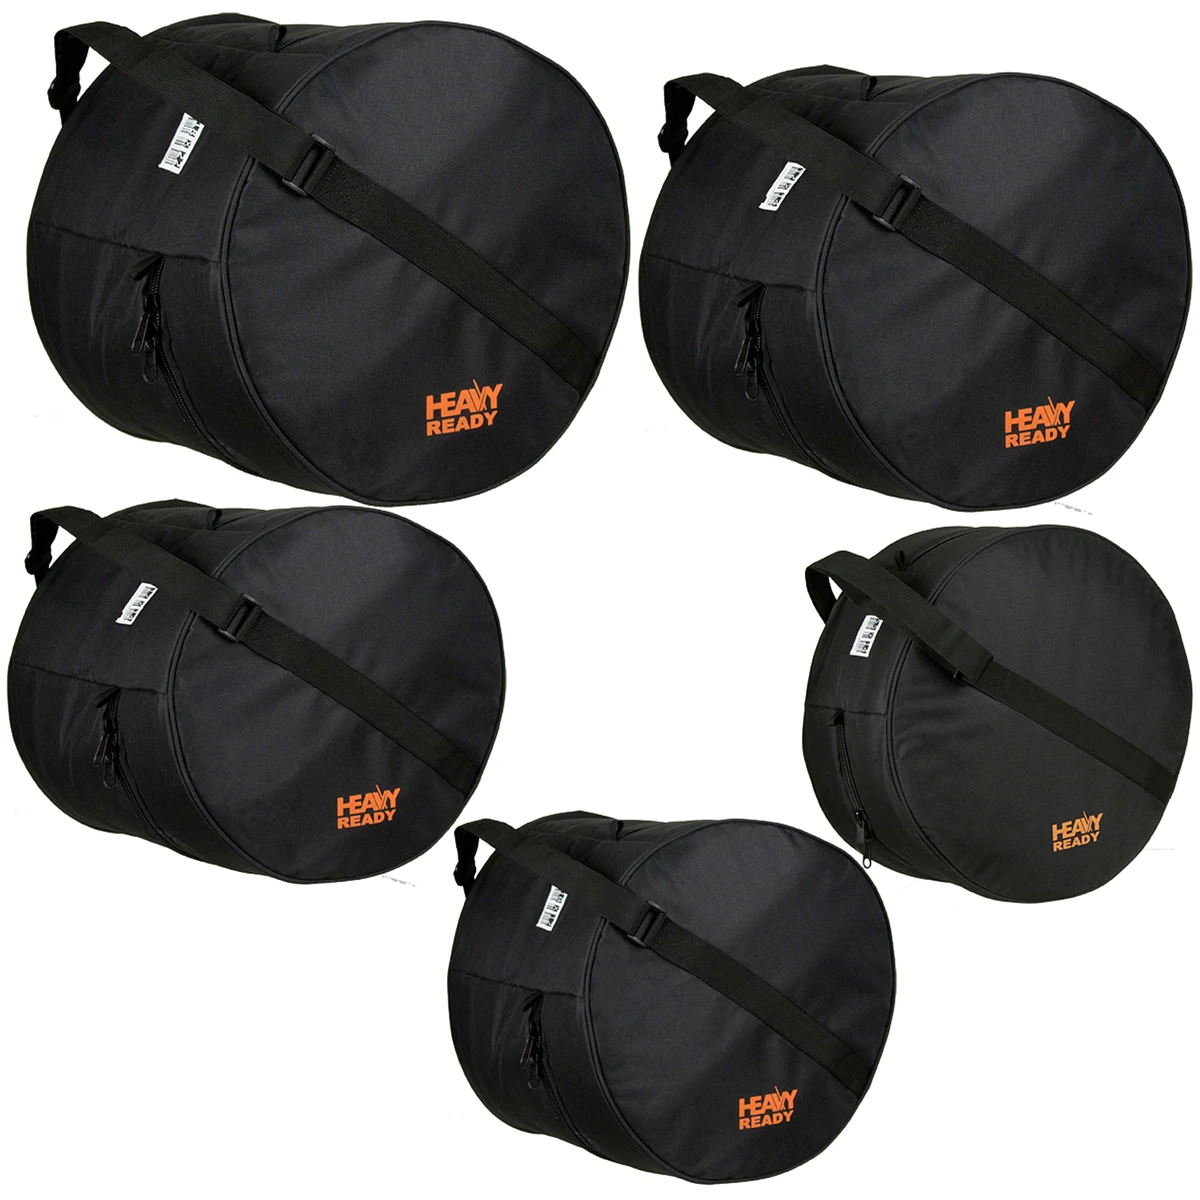 PROTEC Heavy Ready 5pc Bag Kit - Standard 2